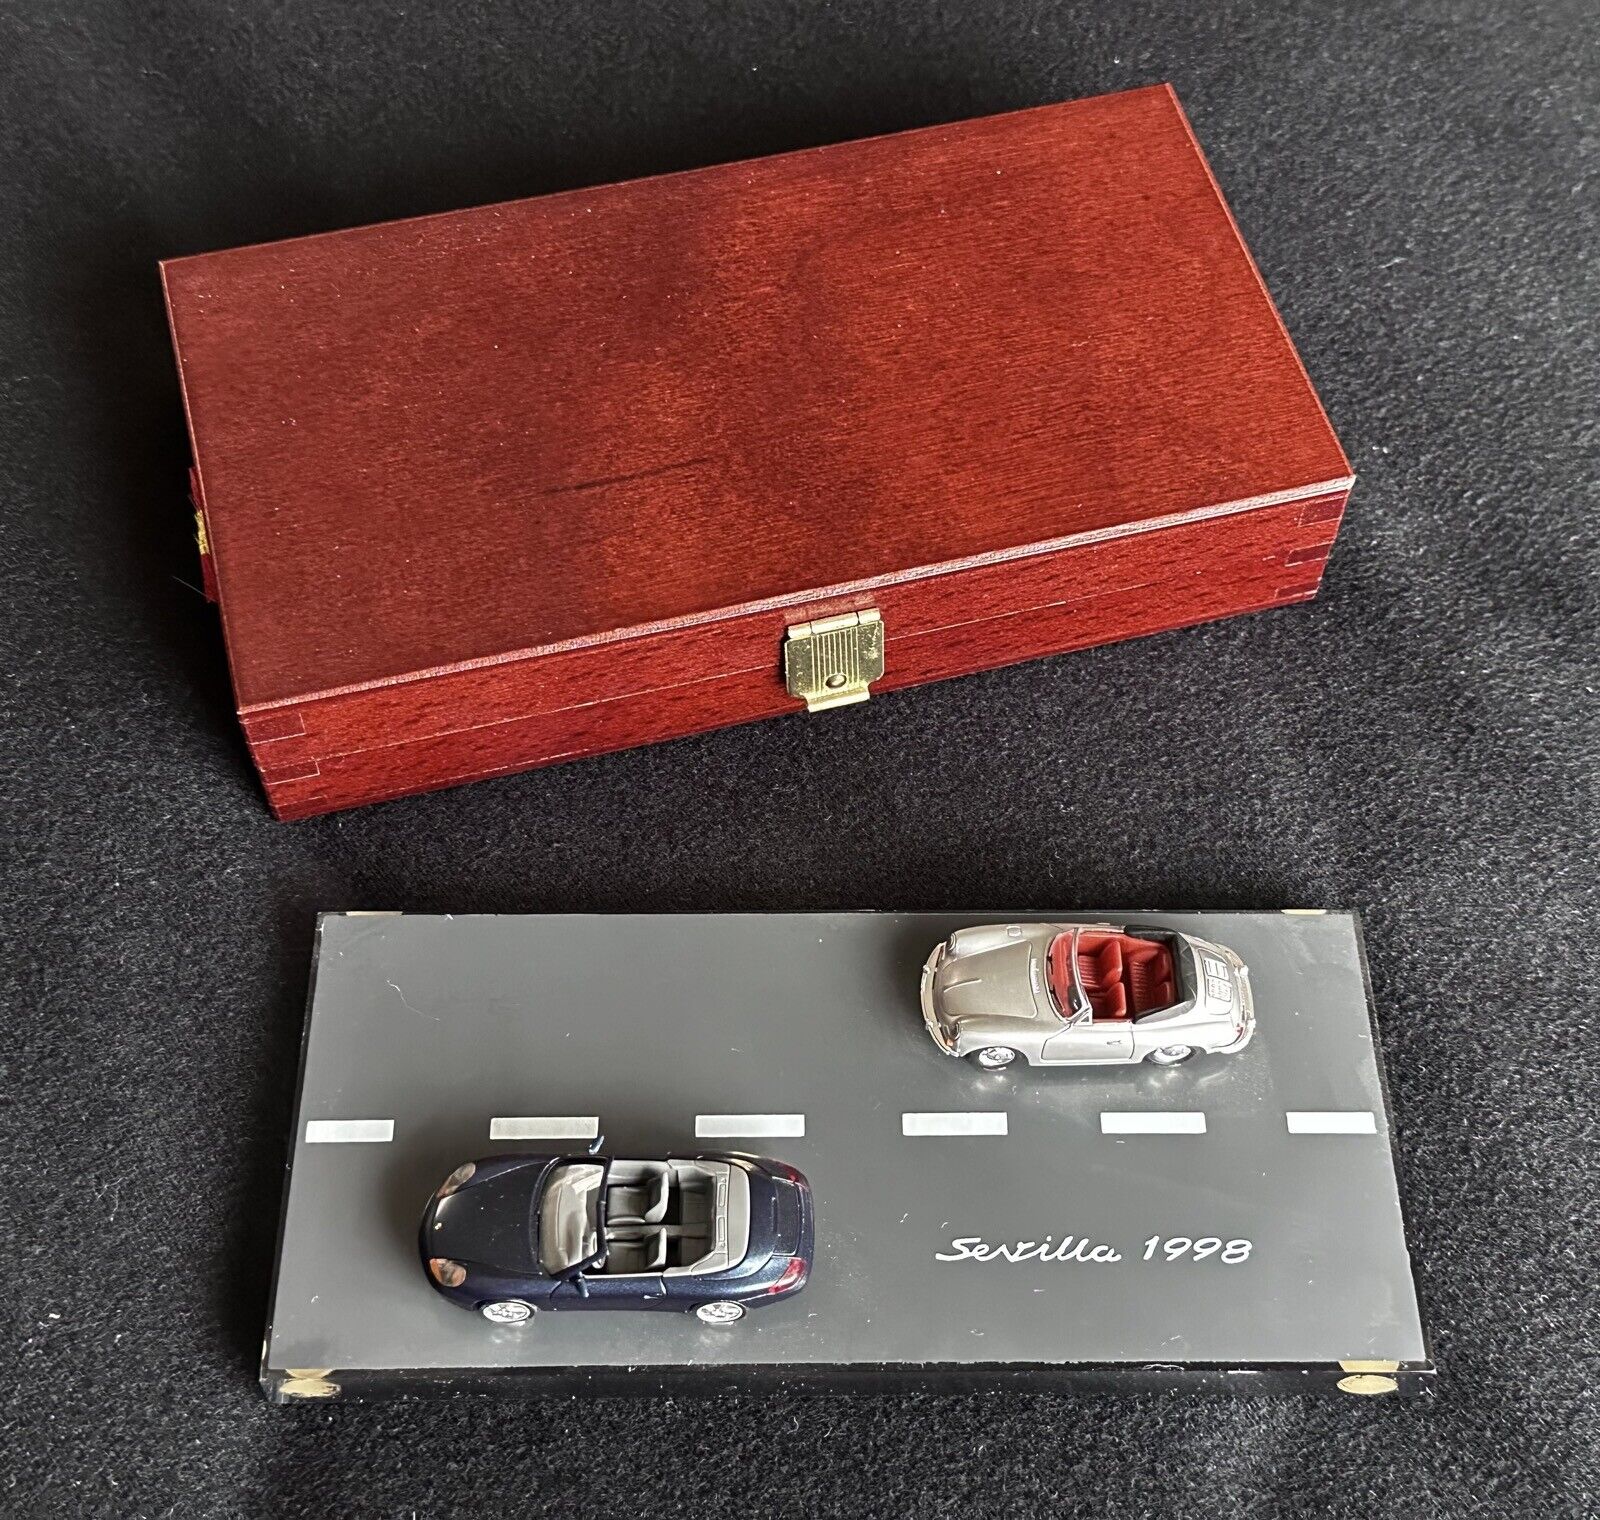 Porsche Boxster 356 Cabriolet 1998 Sevilla Models Wooden Display Box